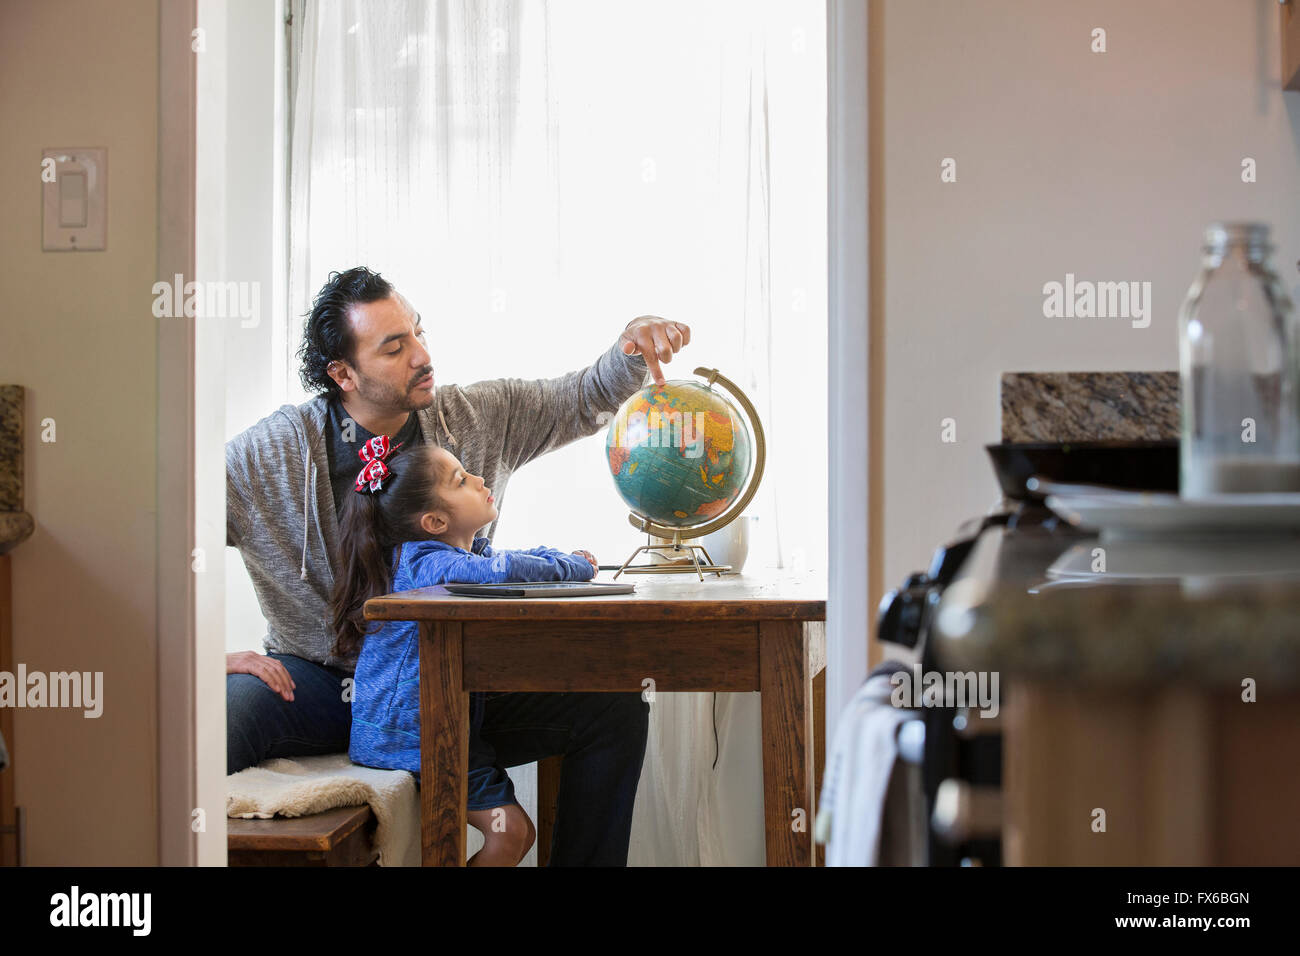 Hispanic father and daughter examining globe Stock Photo